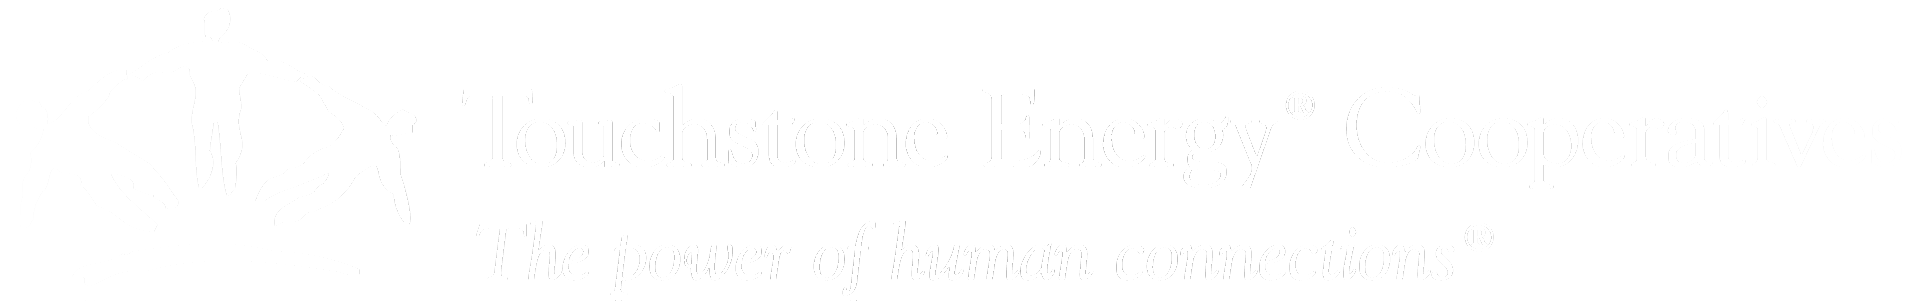 Touchstone Energy Cooperatives Logo